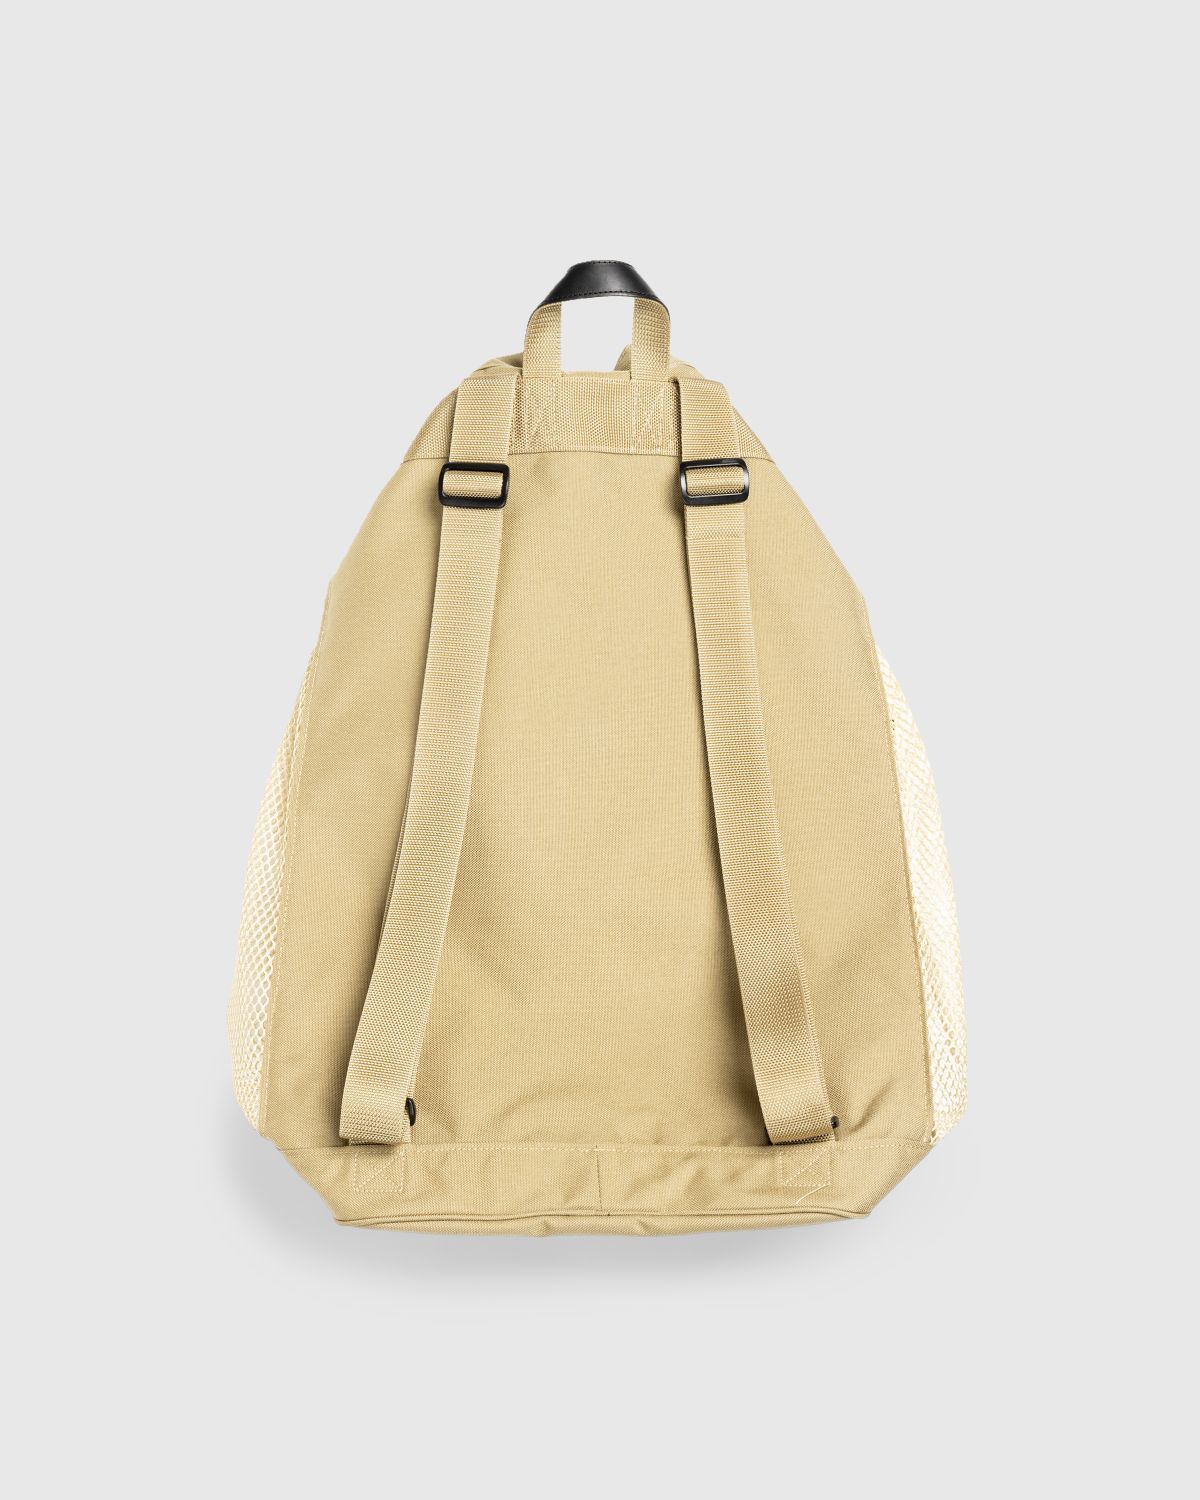 Auralee – Mesh Large Backpack Made By Aeta Beige | Highsnobiety Shop